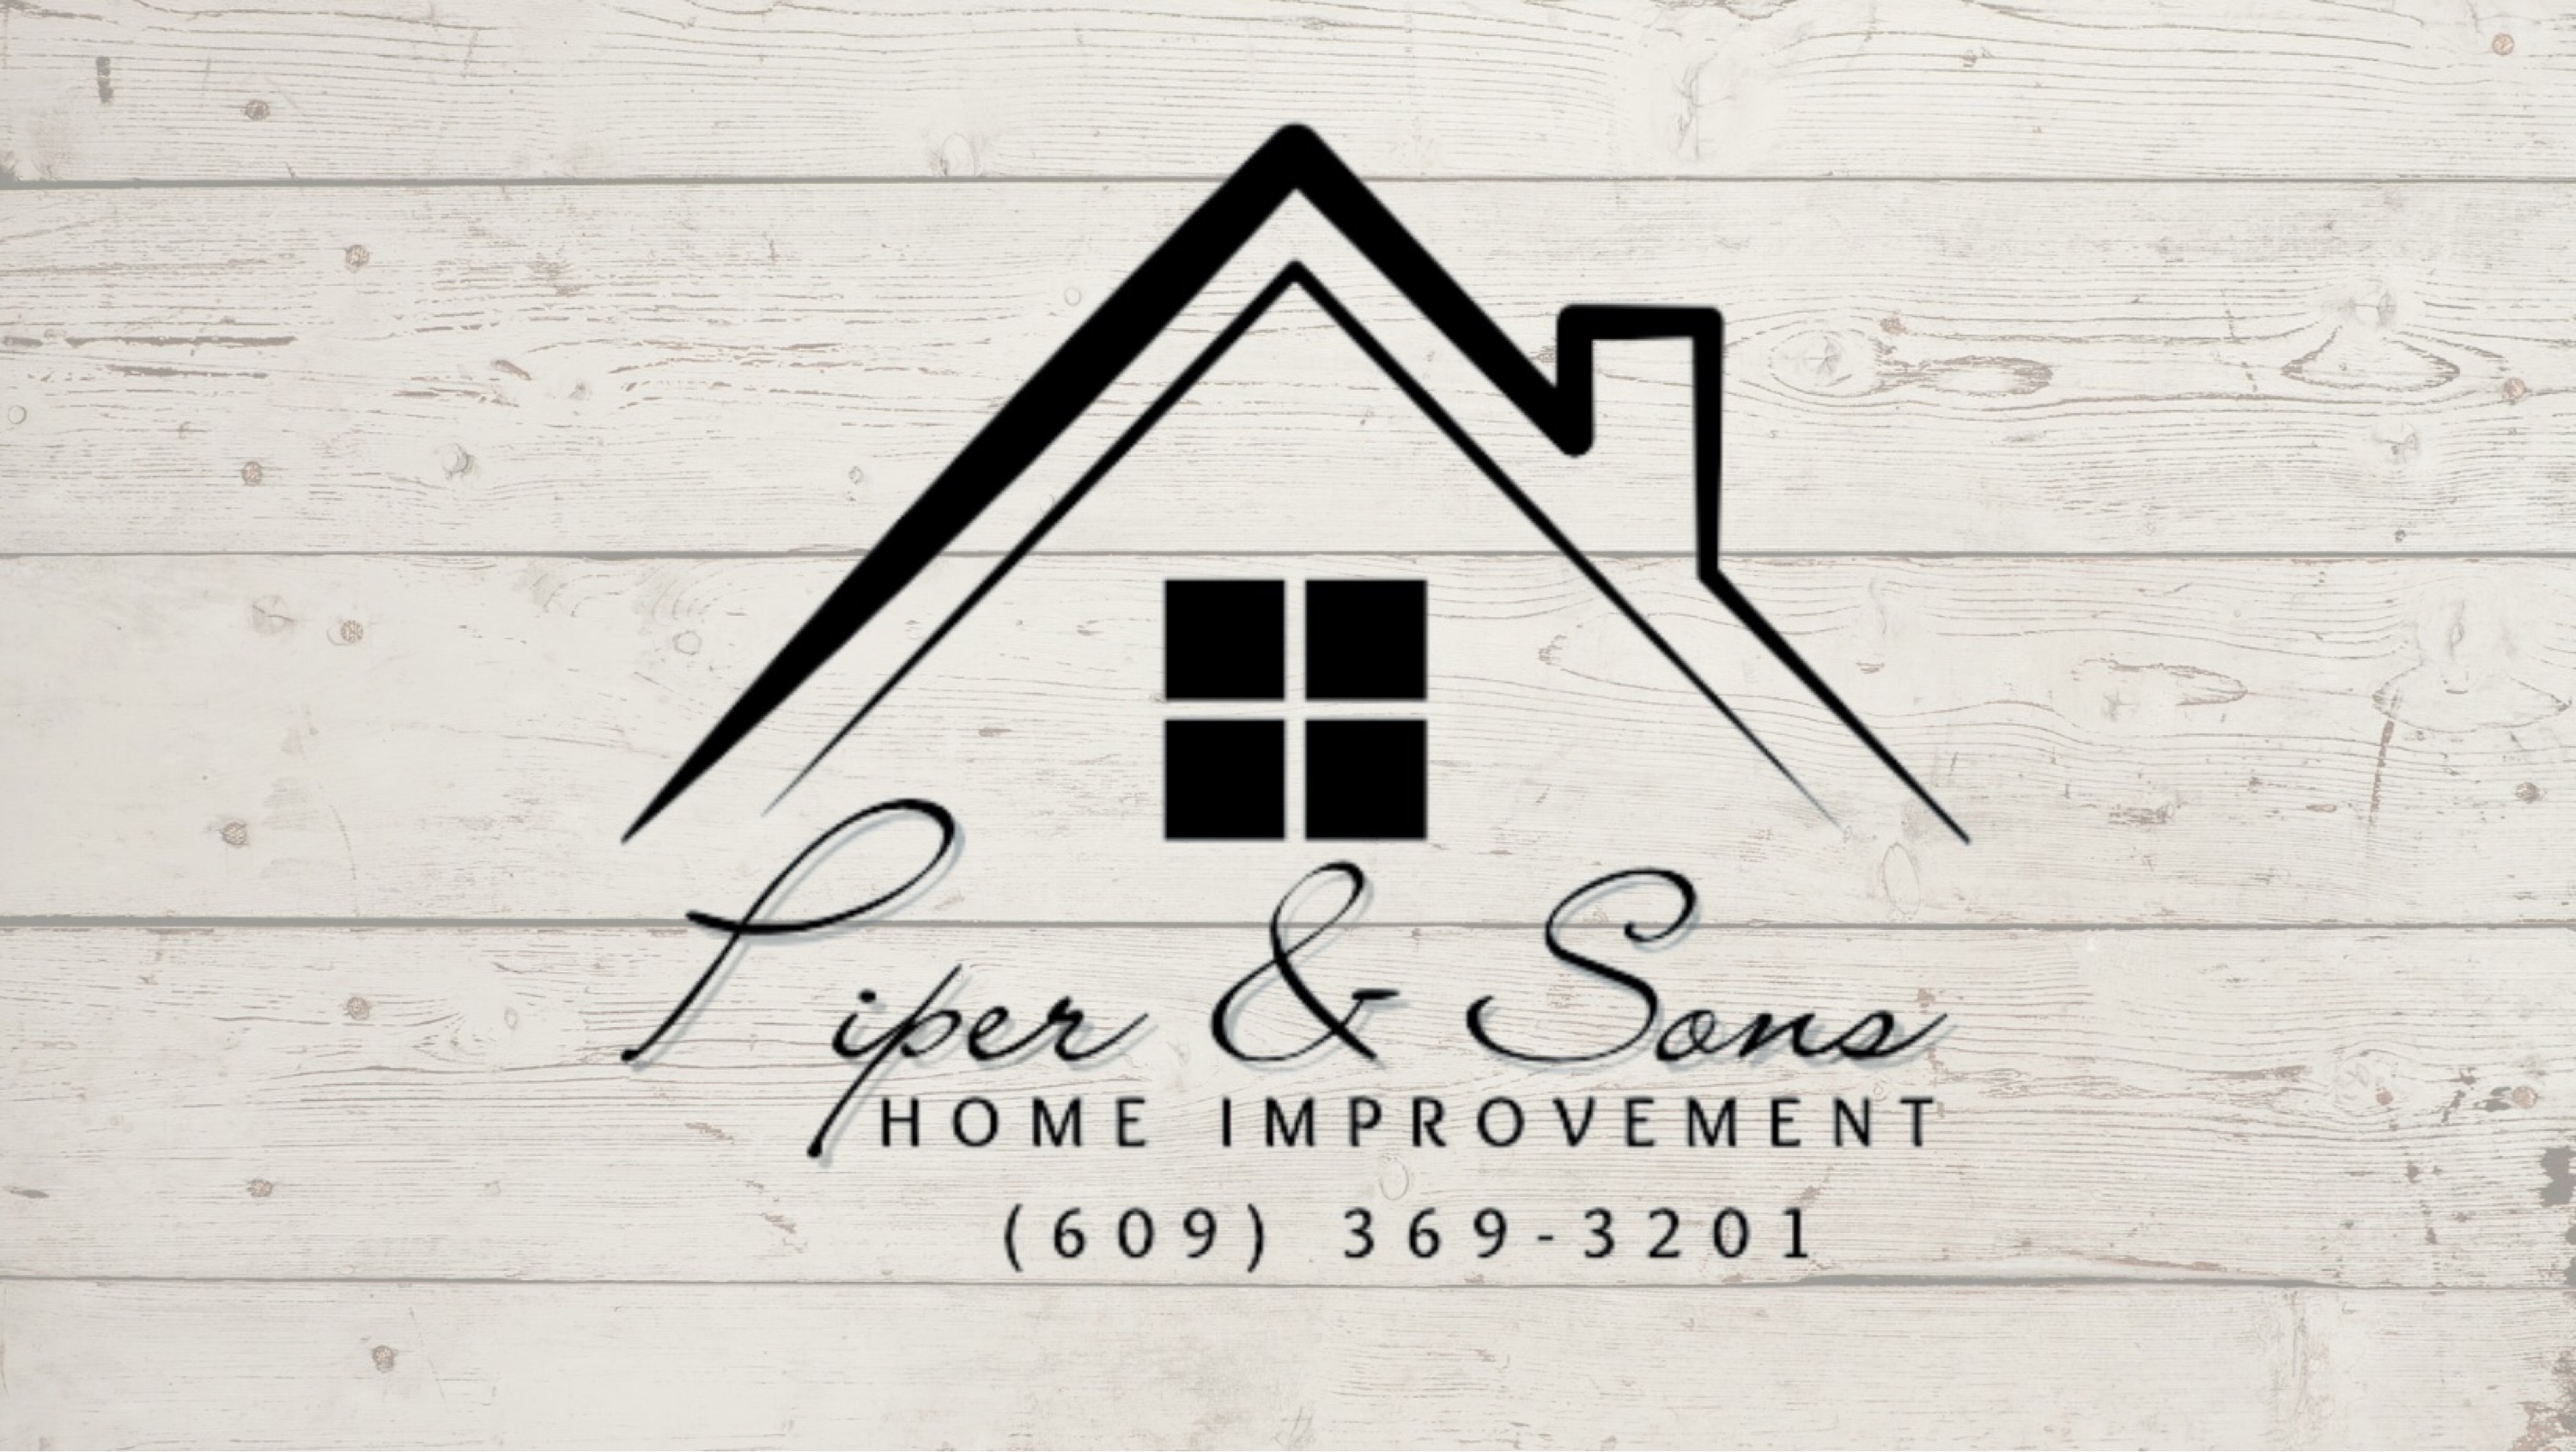 Piper & Sons Home Improvement Logo